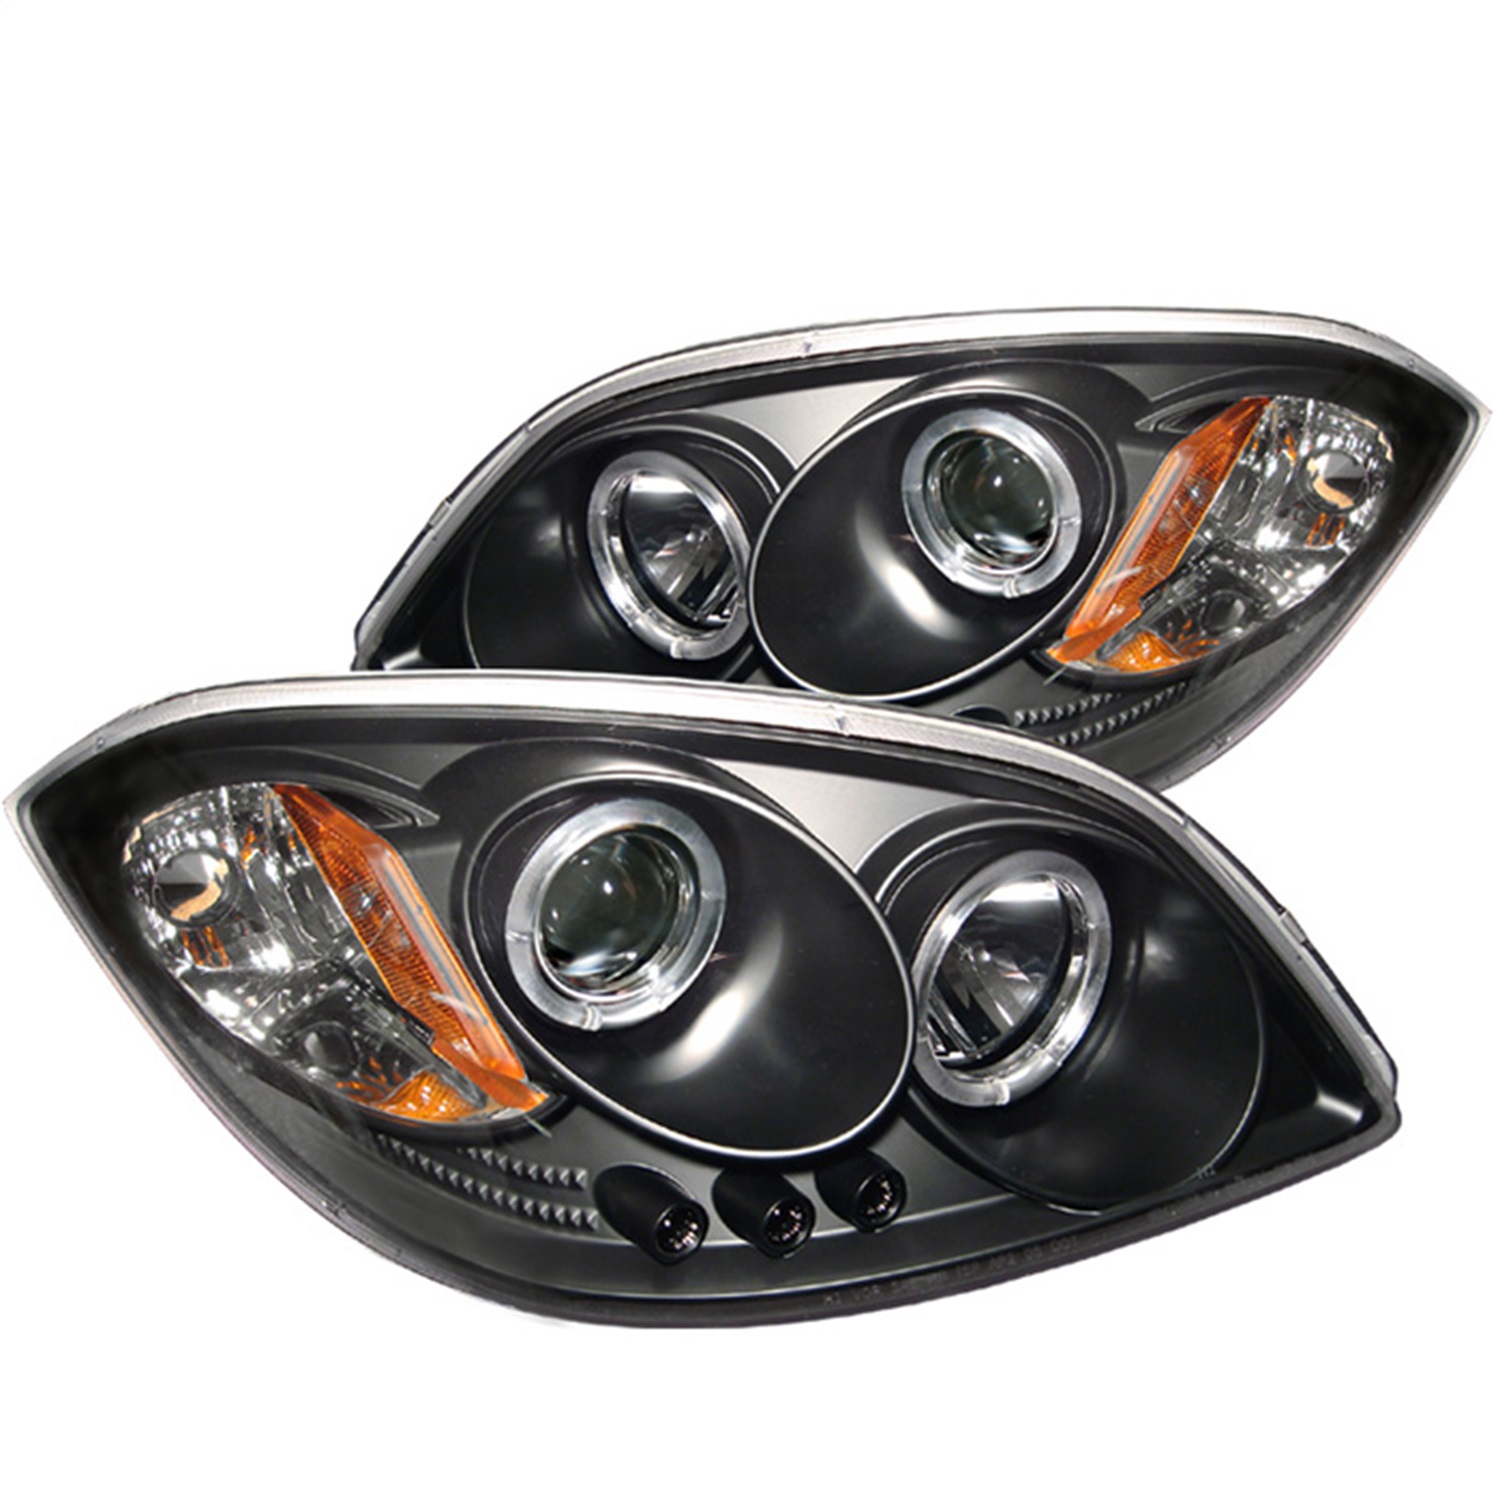 Spyder Auto 5009326 Halo LED Projector Headlights Fits 05-10 Cobalt G5 Pursuit